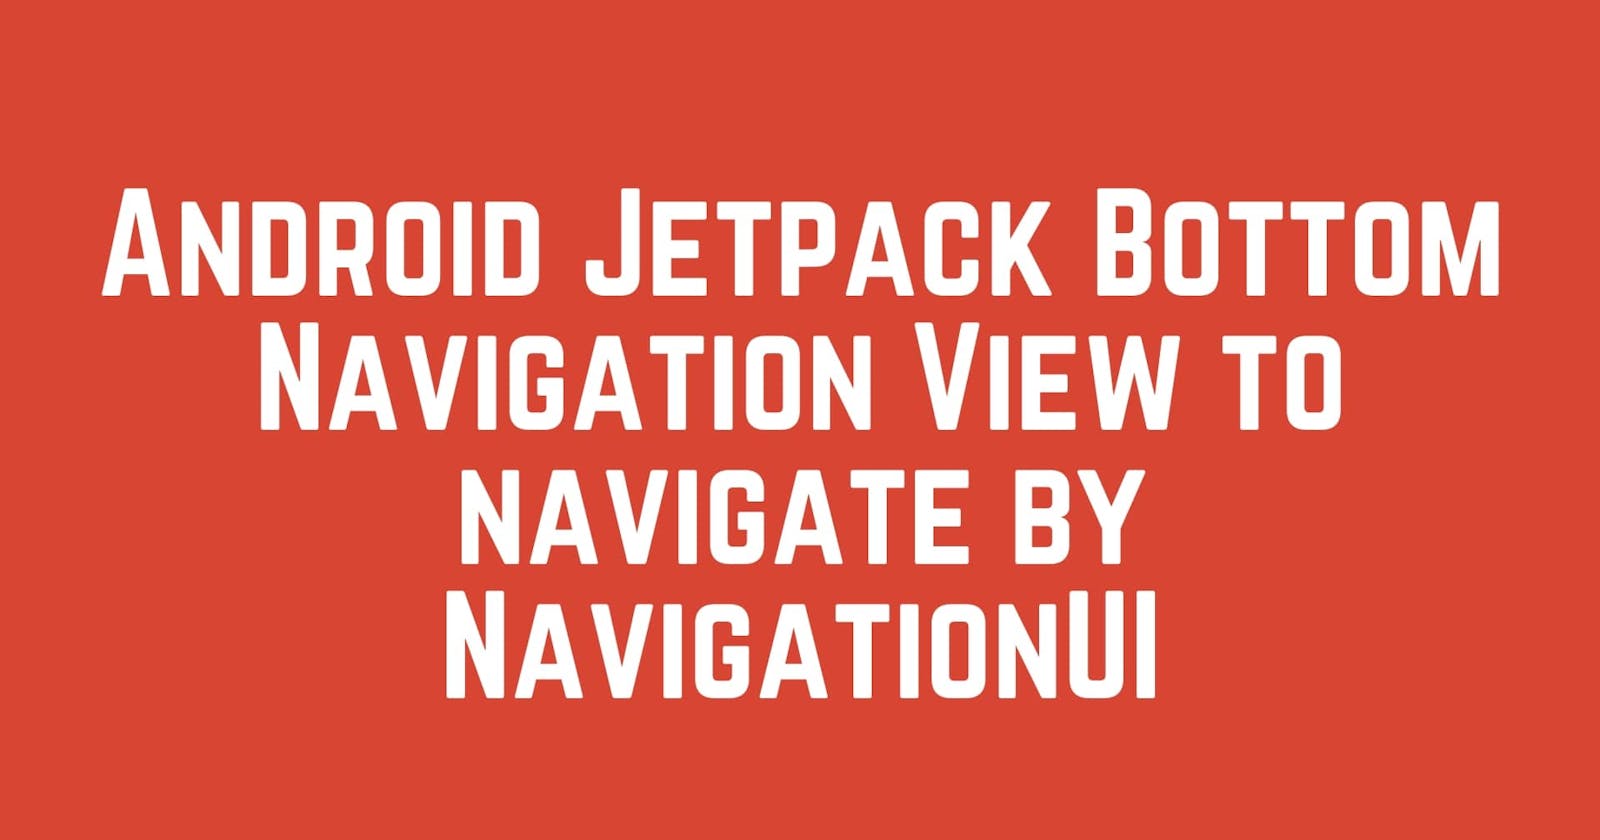 Android Navigation Components: NavigationUI - Toolbar, Navigation drawer, Bottom navigation